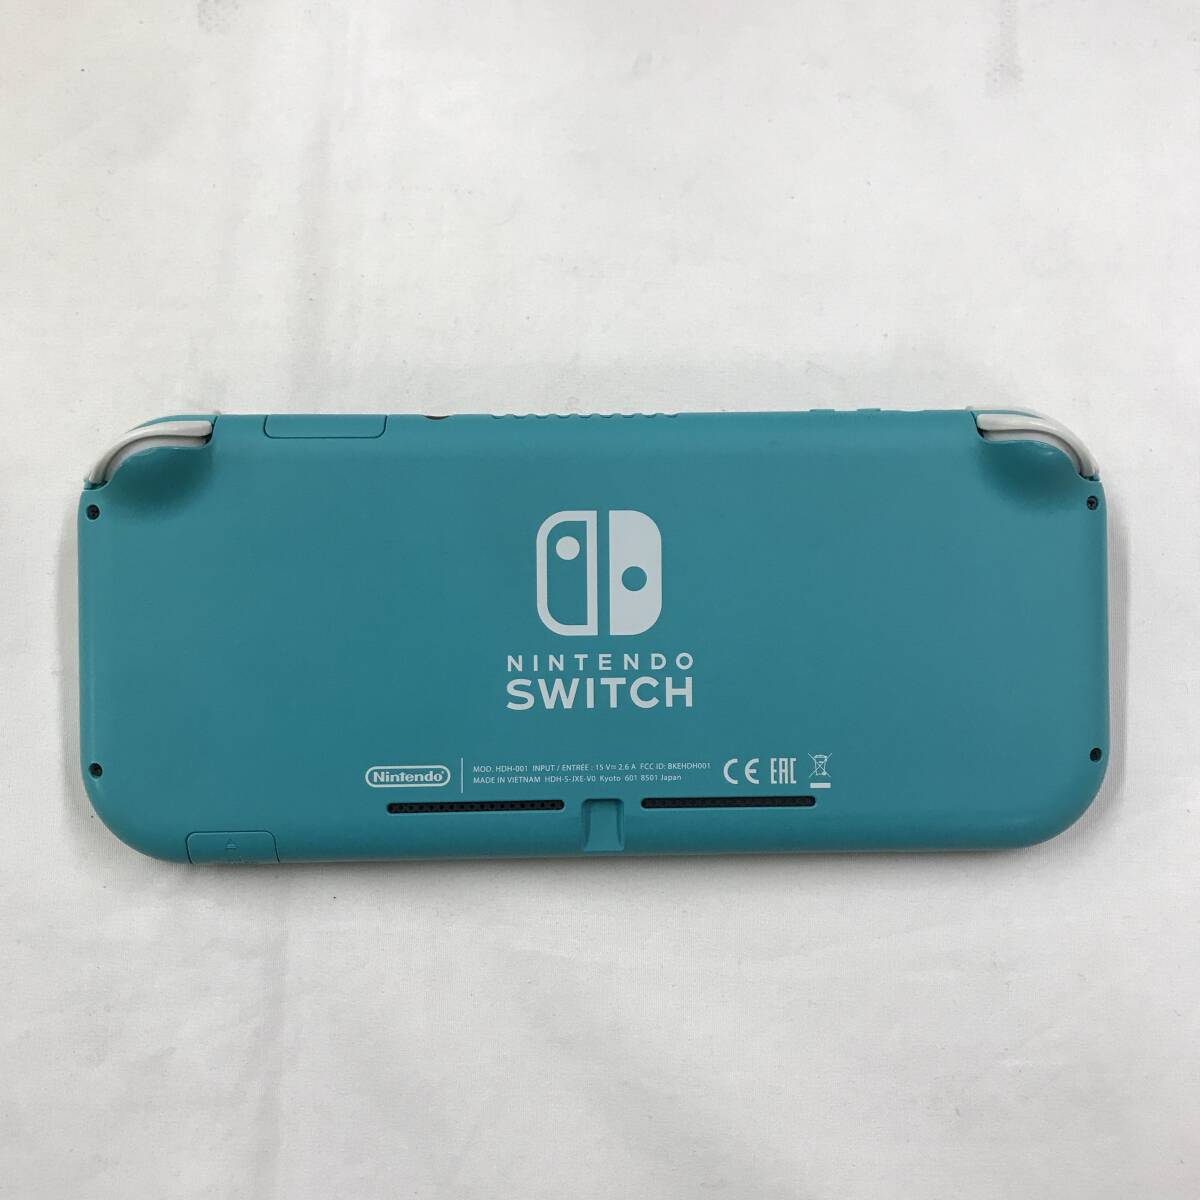 gb2466 free shipping! operation goods Nintendo nintendo Nintendo Switch Lite body only switch light turquoise 